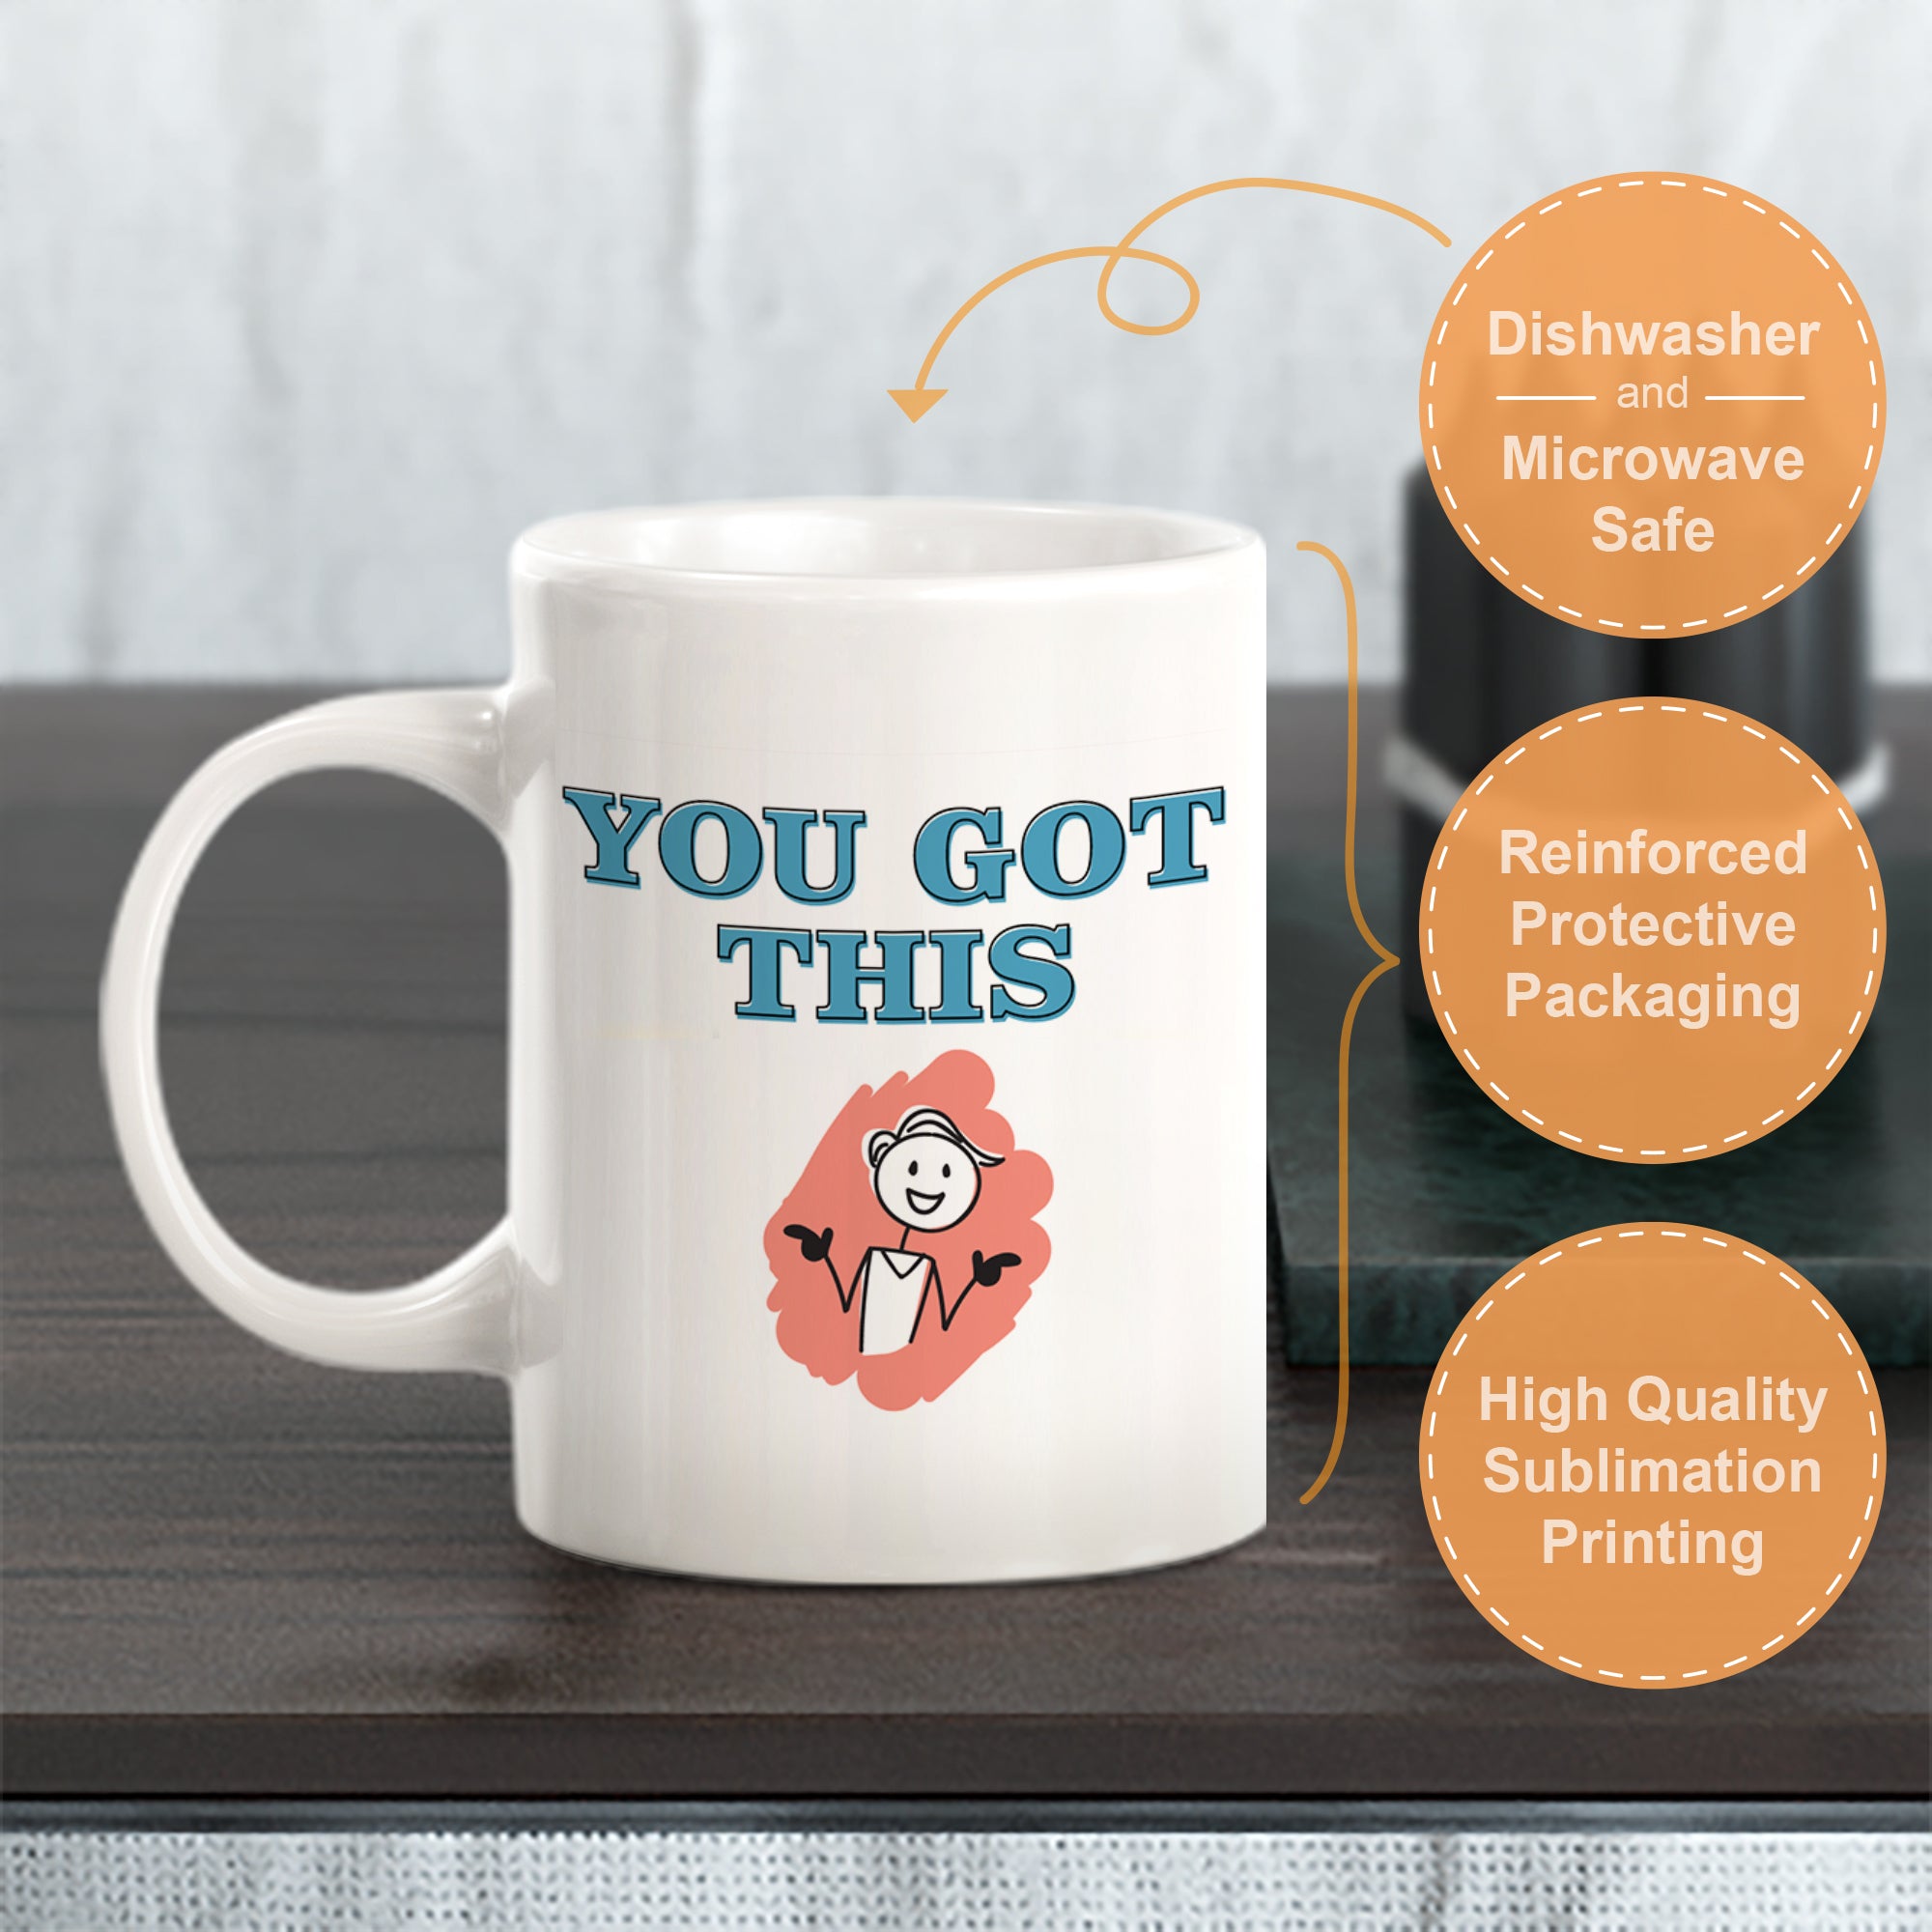 You Got This Stick People Design Coffee Mug